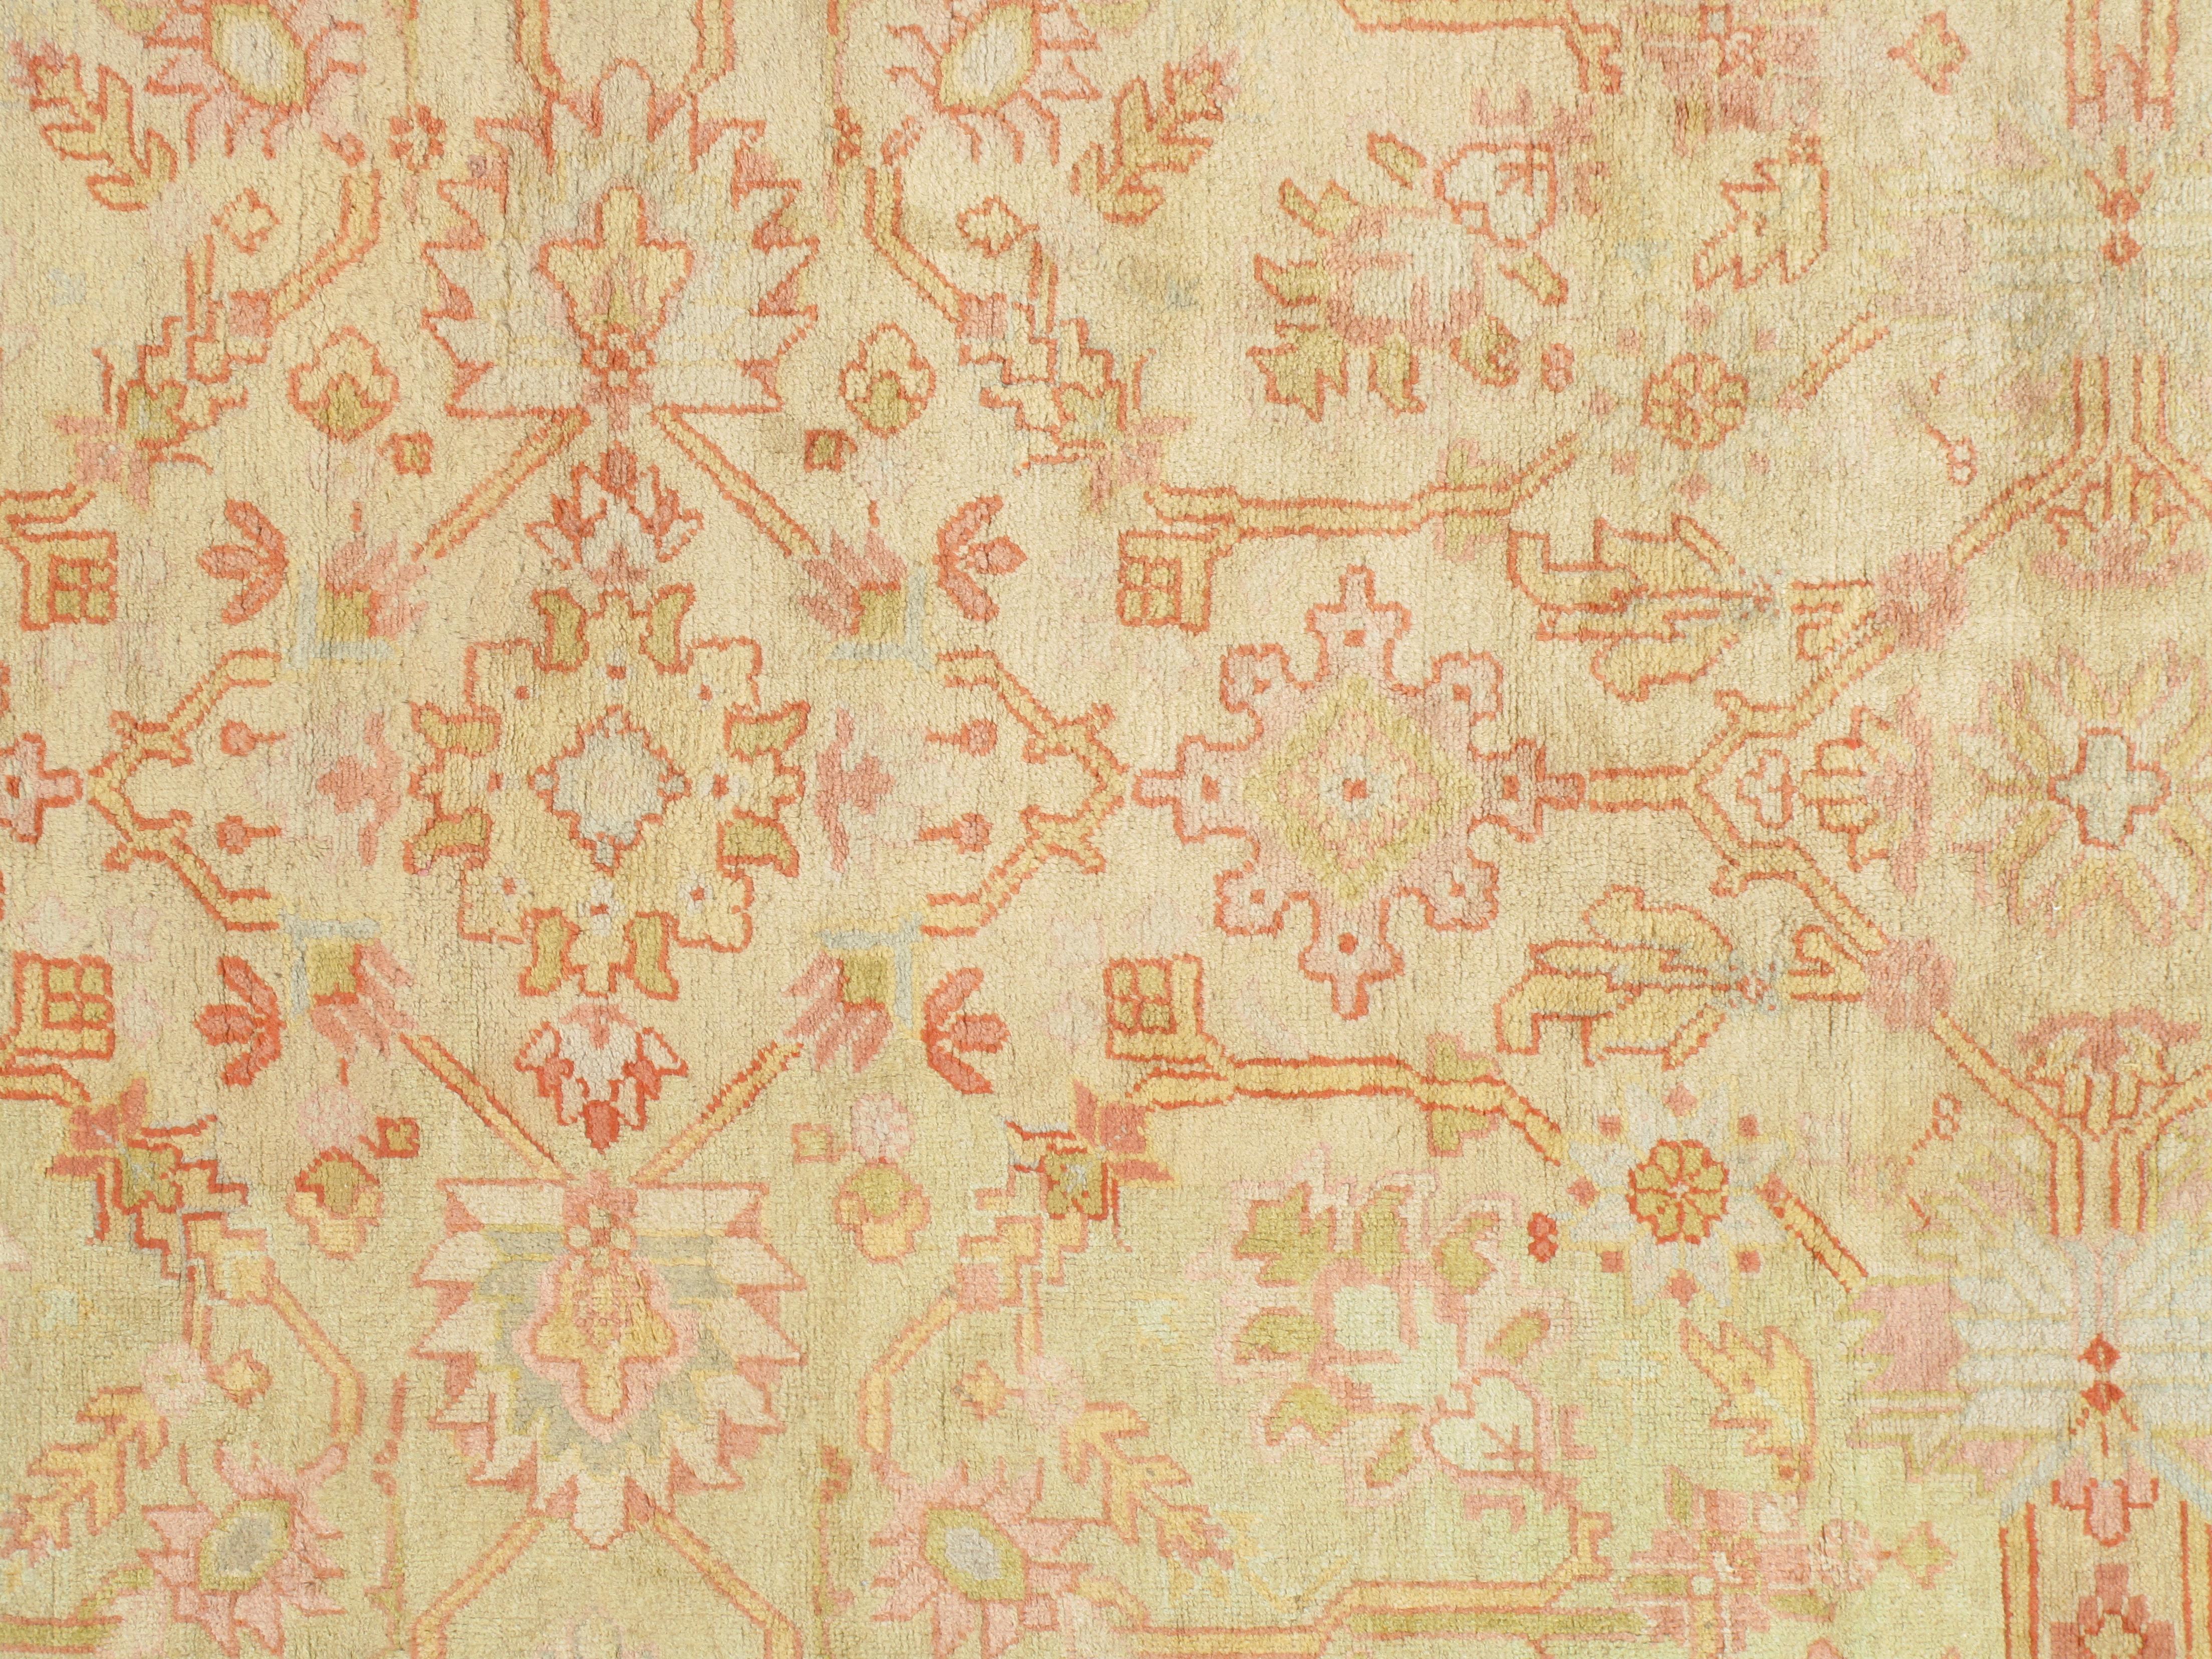 Antique Turkish Oushak Carpet, Handmade Oriental Rug, Beige, Taupe, Sage, Coral For Sale 5